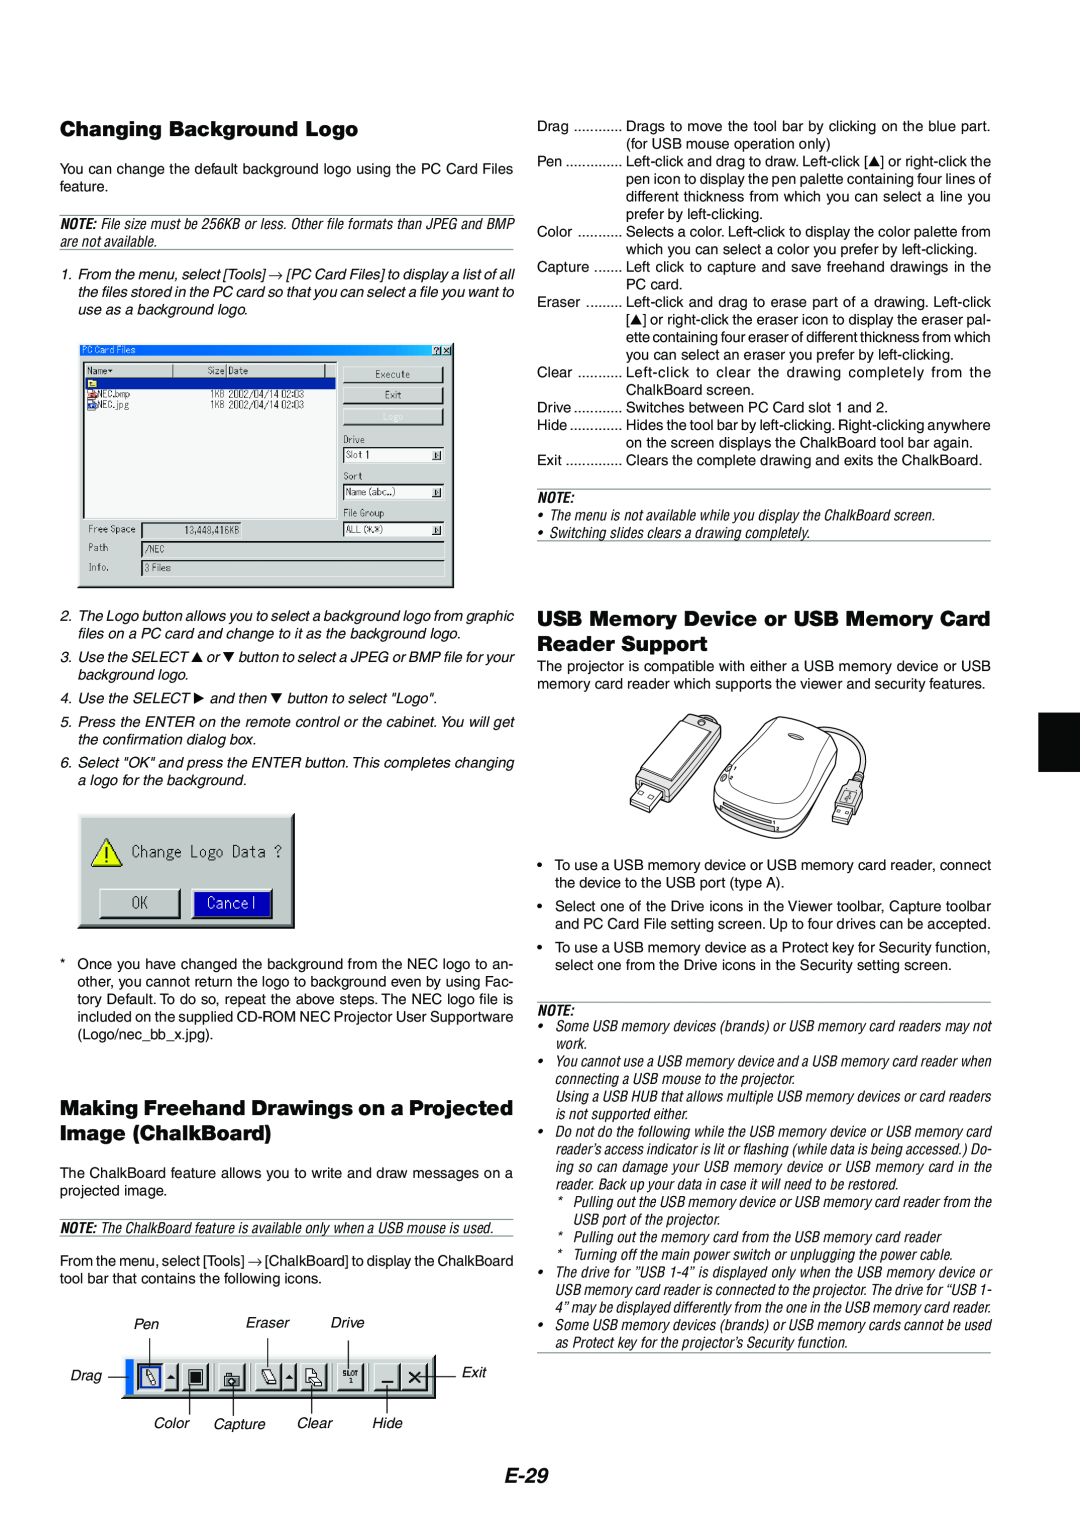 NEC MT1075/MT1065 user manual Changing Background Logo, E-29 